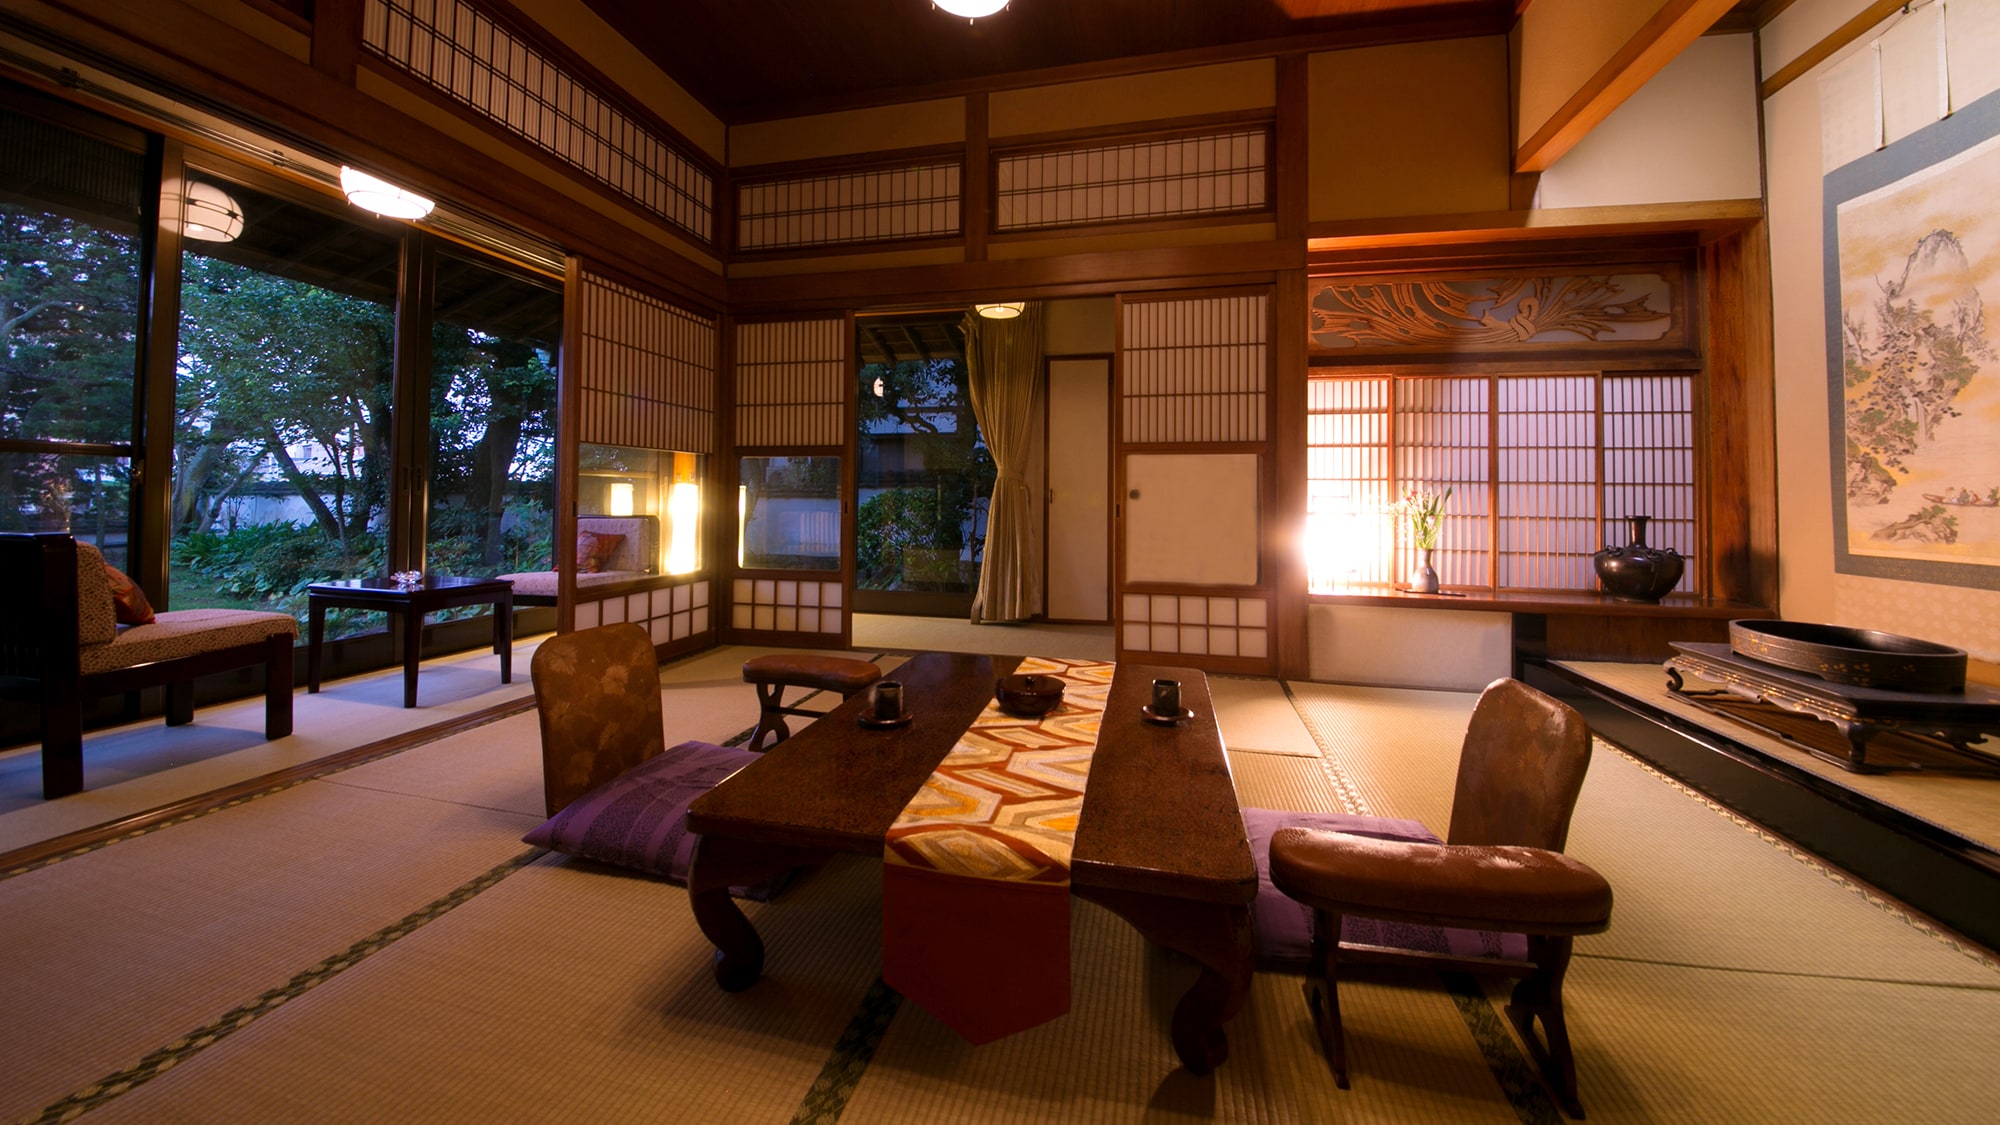 ◆ Japanese-style room 8 tatami mats "Urashima" ◆